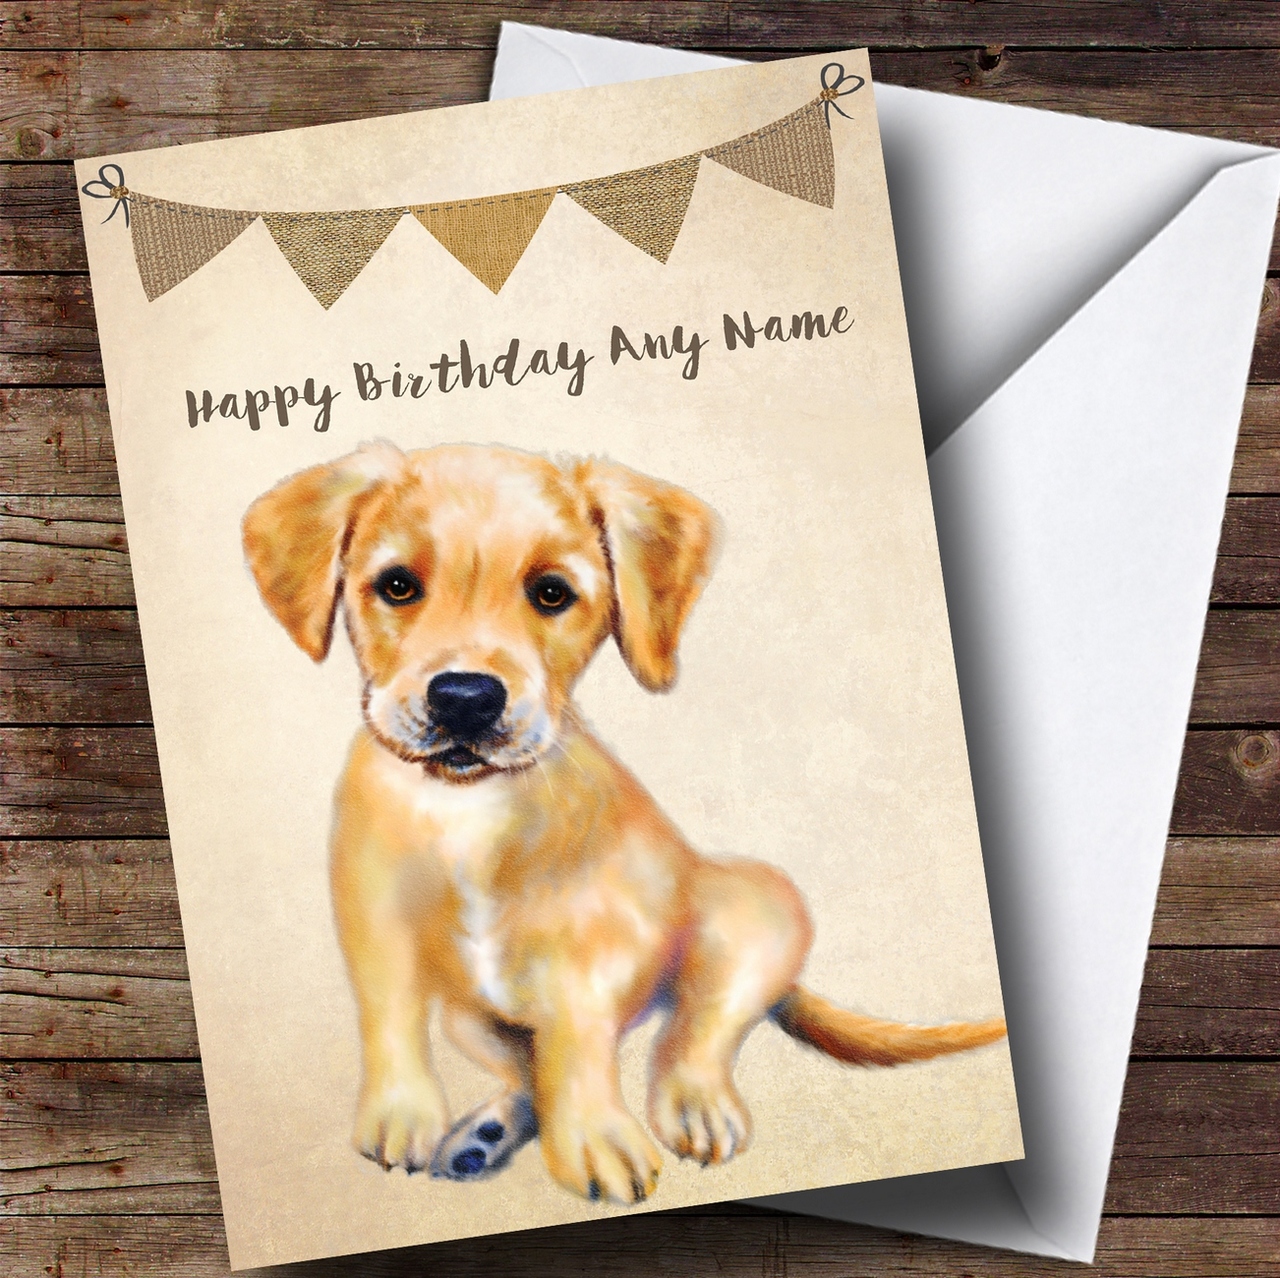 animal-birthday-cards-funny-animal-birthday-cards-see-more-ideas